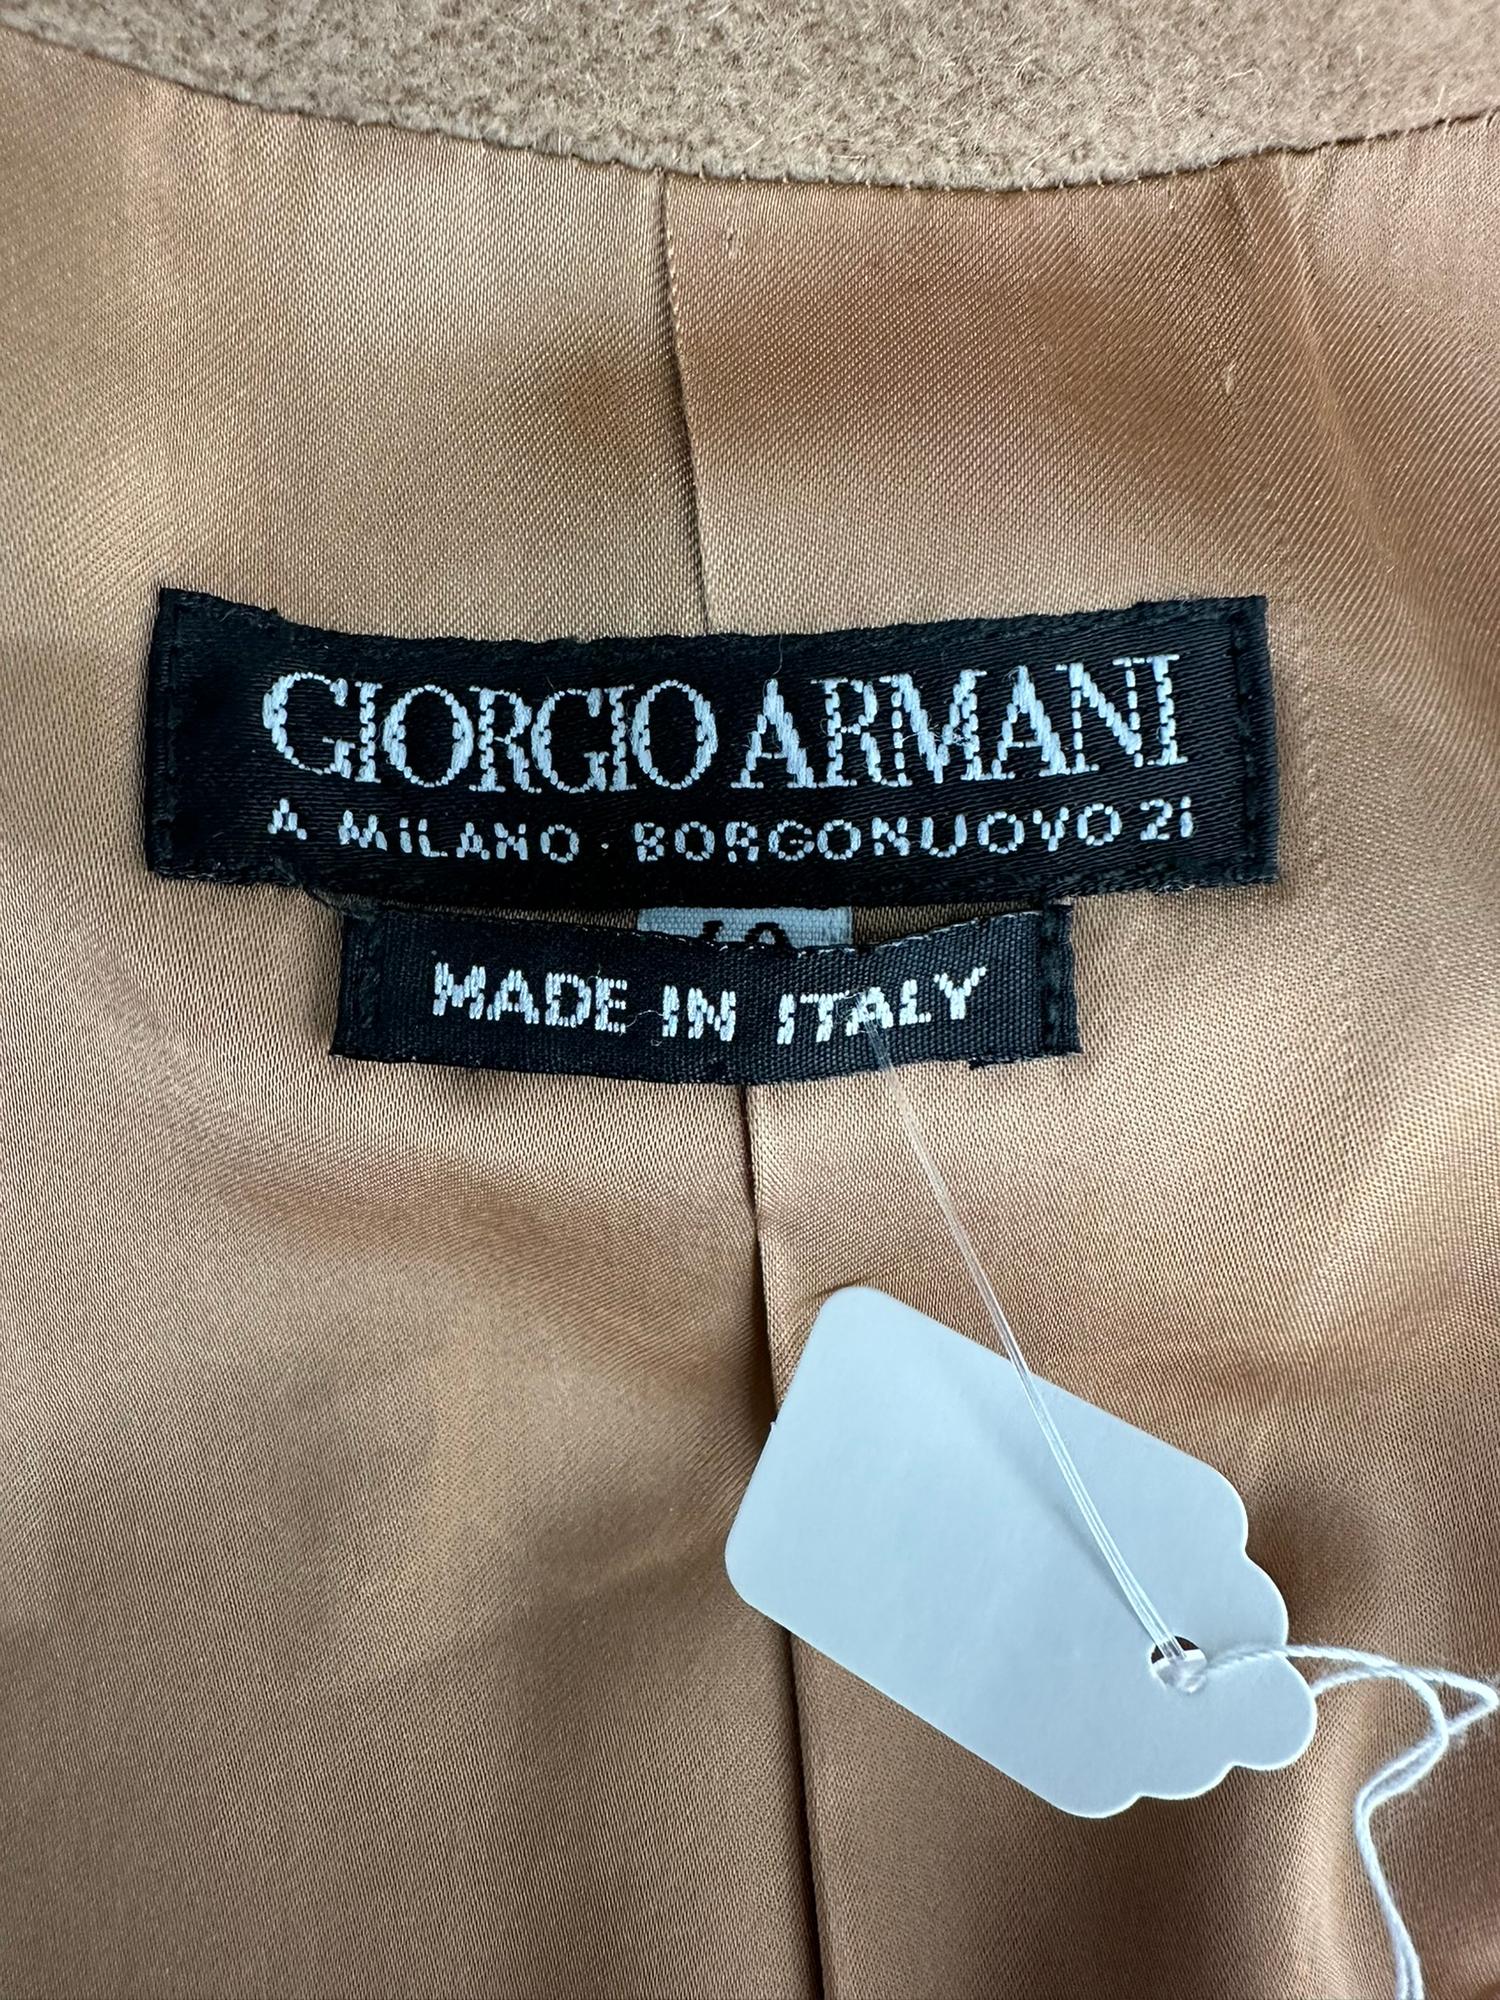 Giorgio Armani Camel Hair Classic Double Breasted Coat 1990s For Sale 9